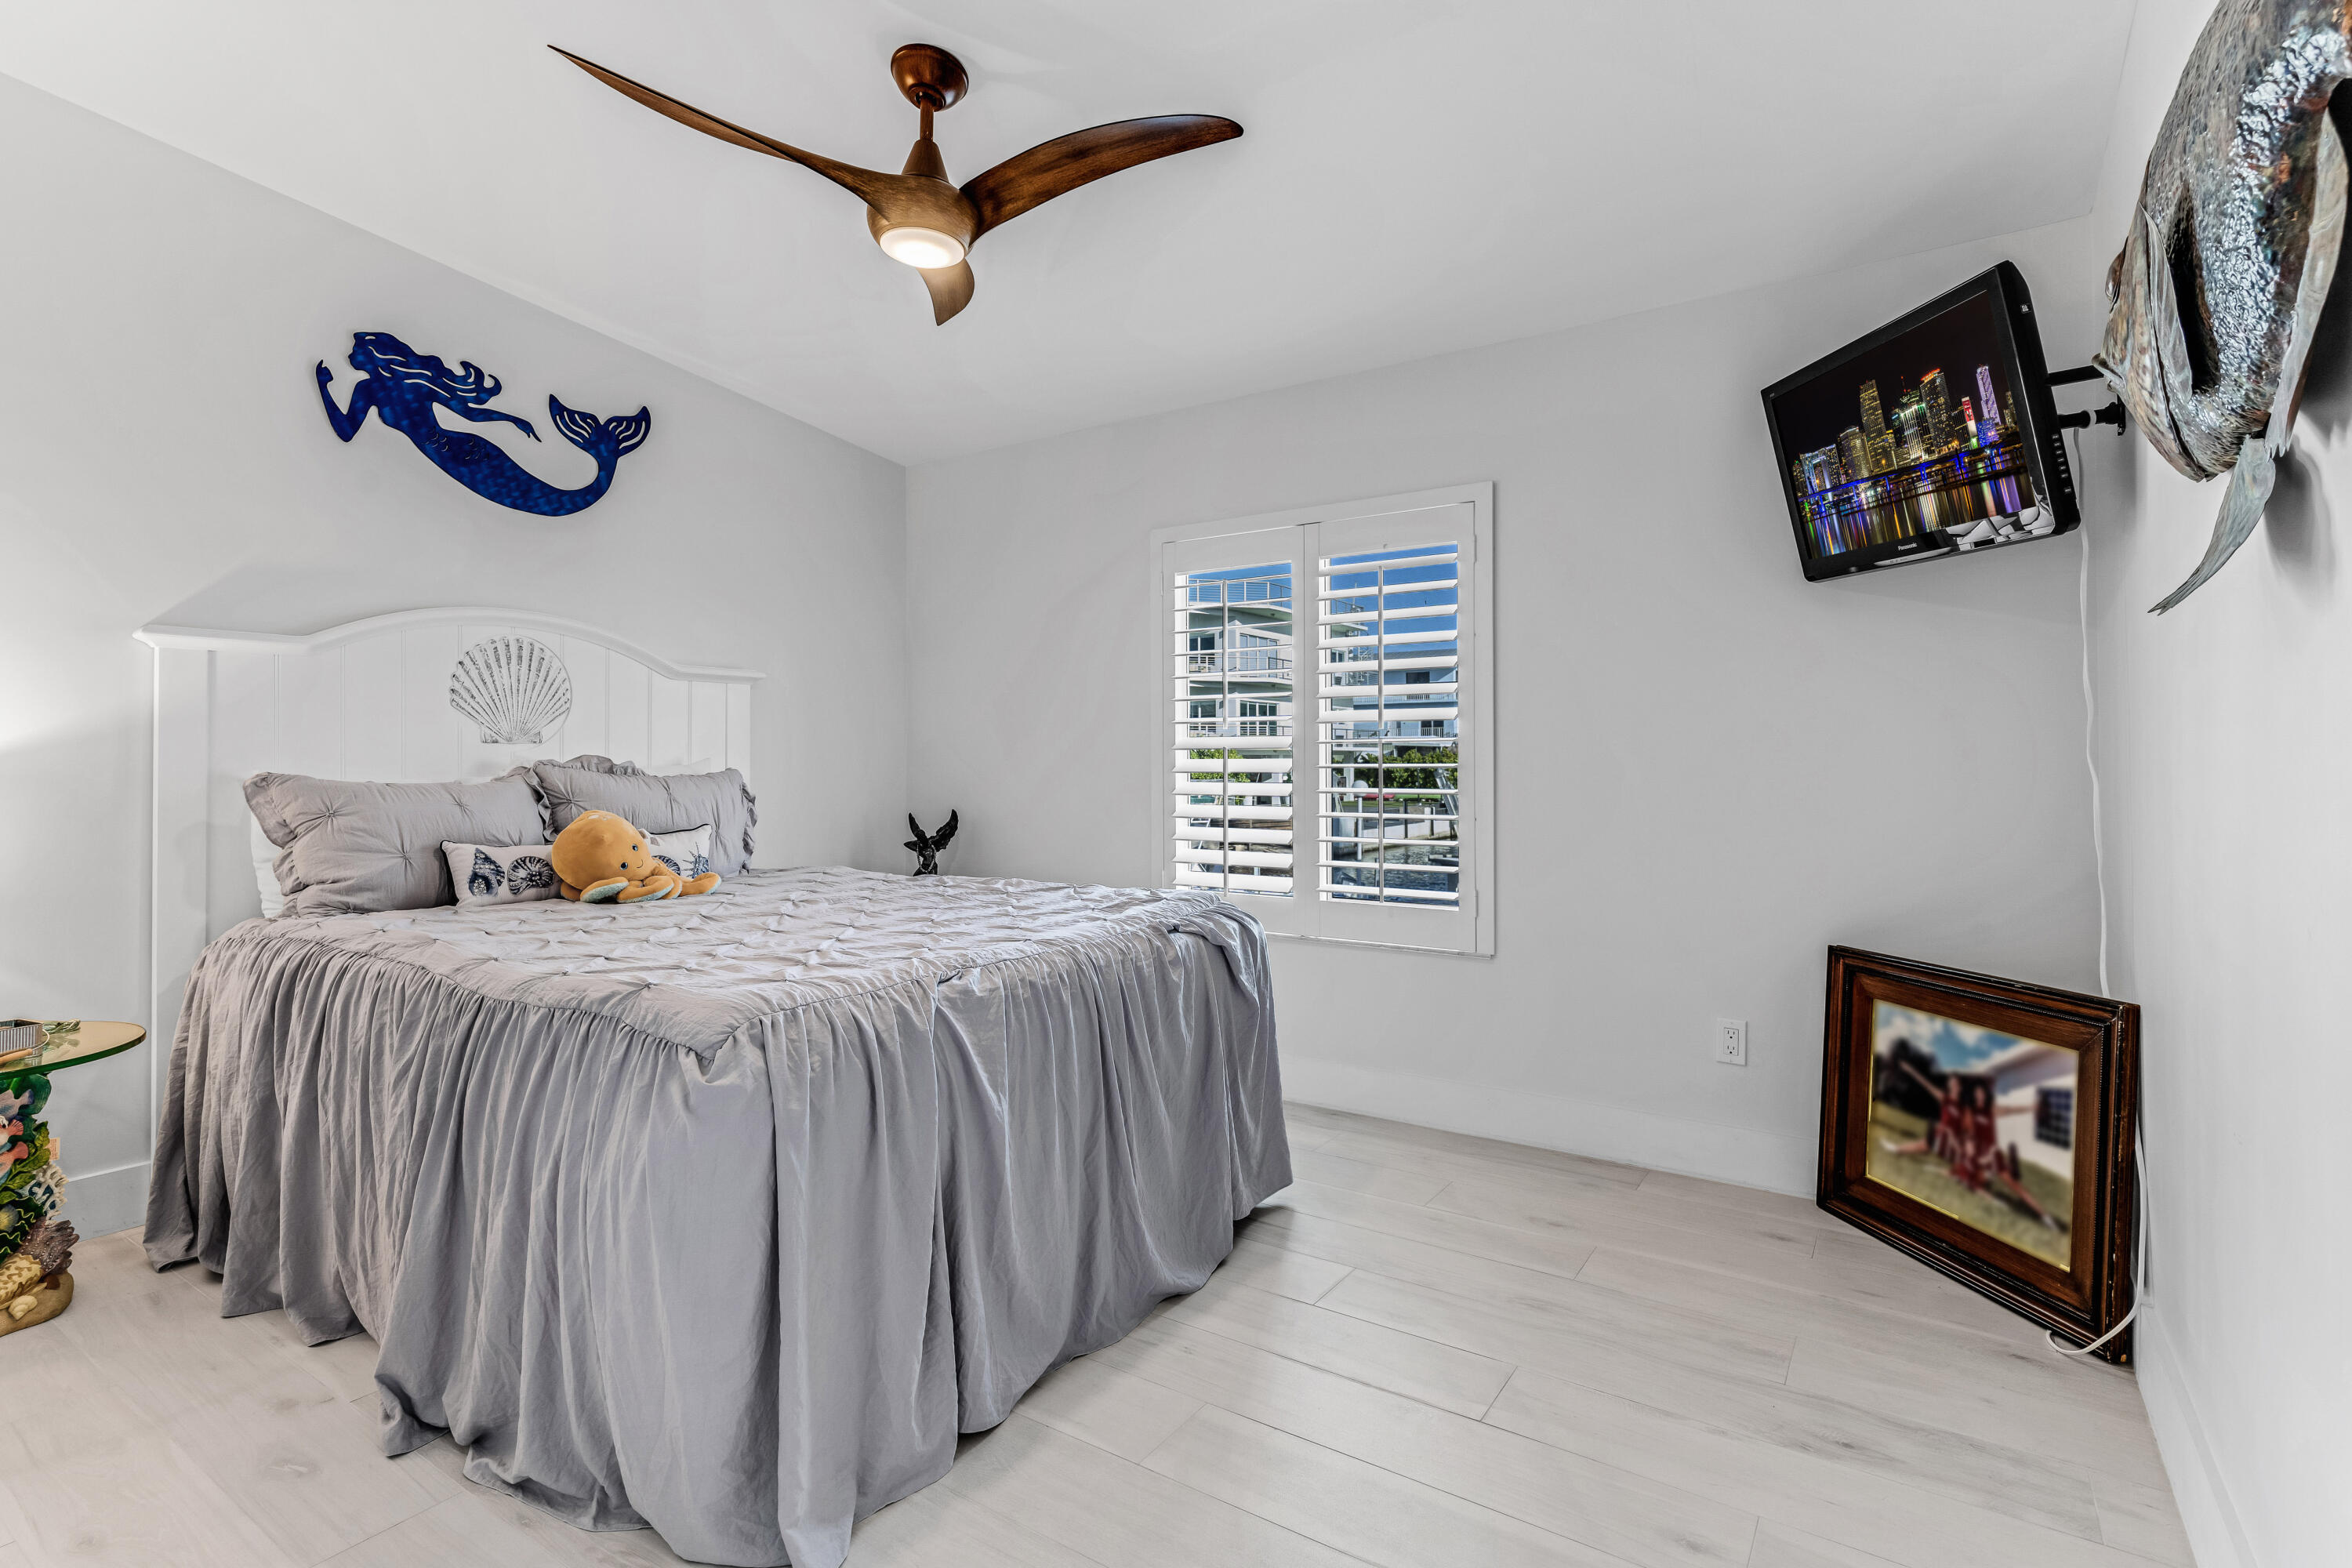 1302 Calder Road, Key Largo, Florida, 33037, United States, 3 Bedrooms Bedrooms, ,2 BathroomsBathrooms,Residential,For Sale,1302 Calder Road,1478758